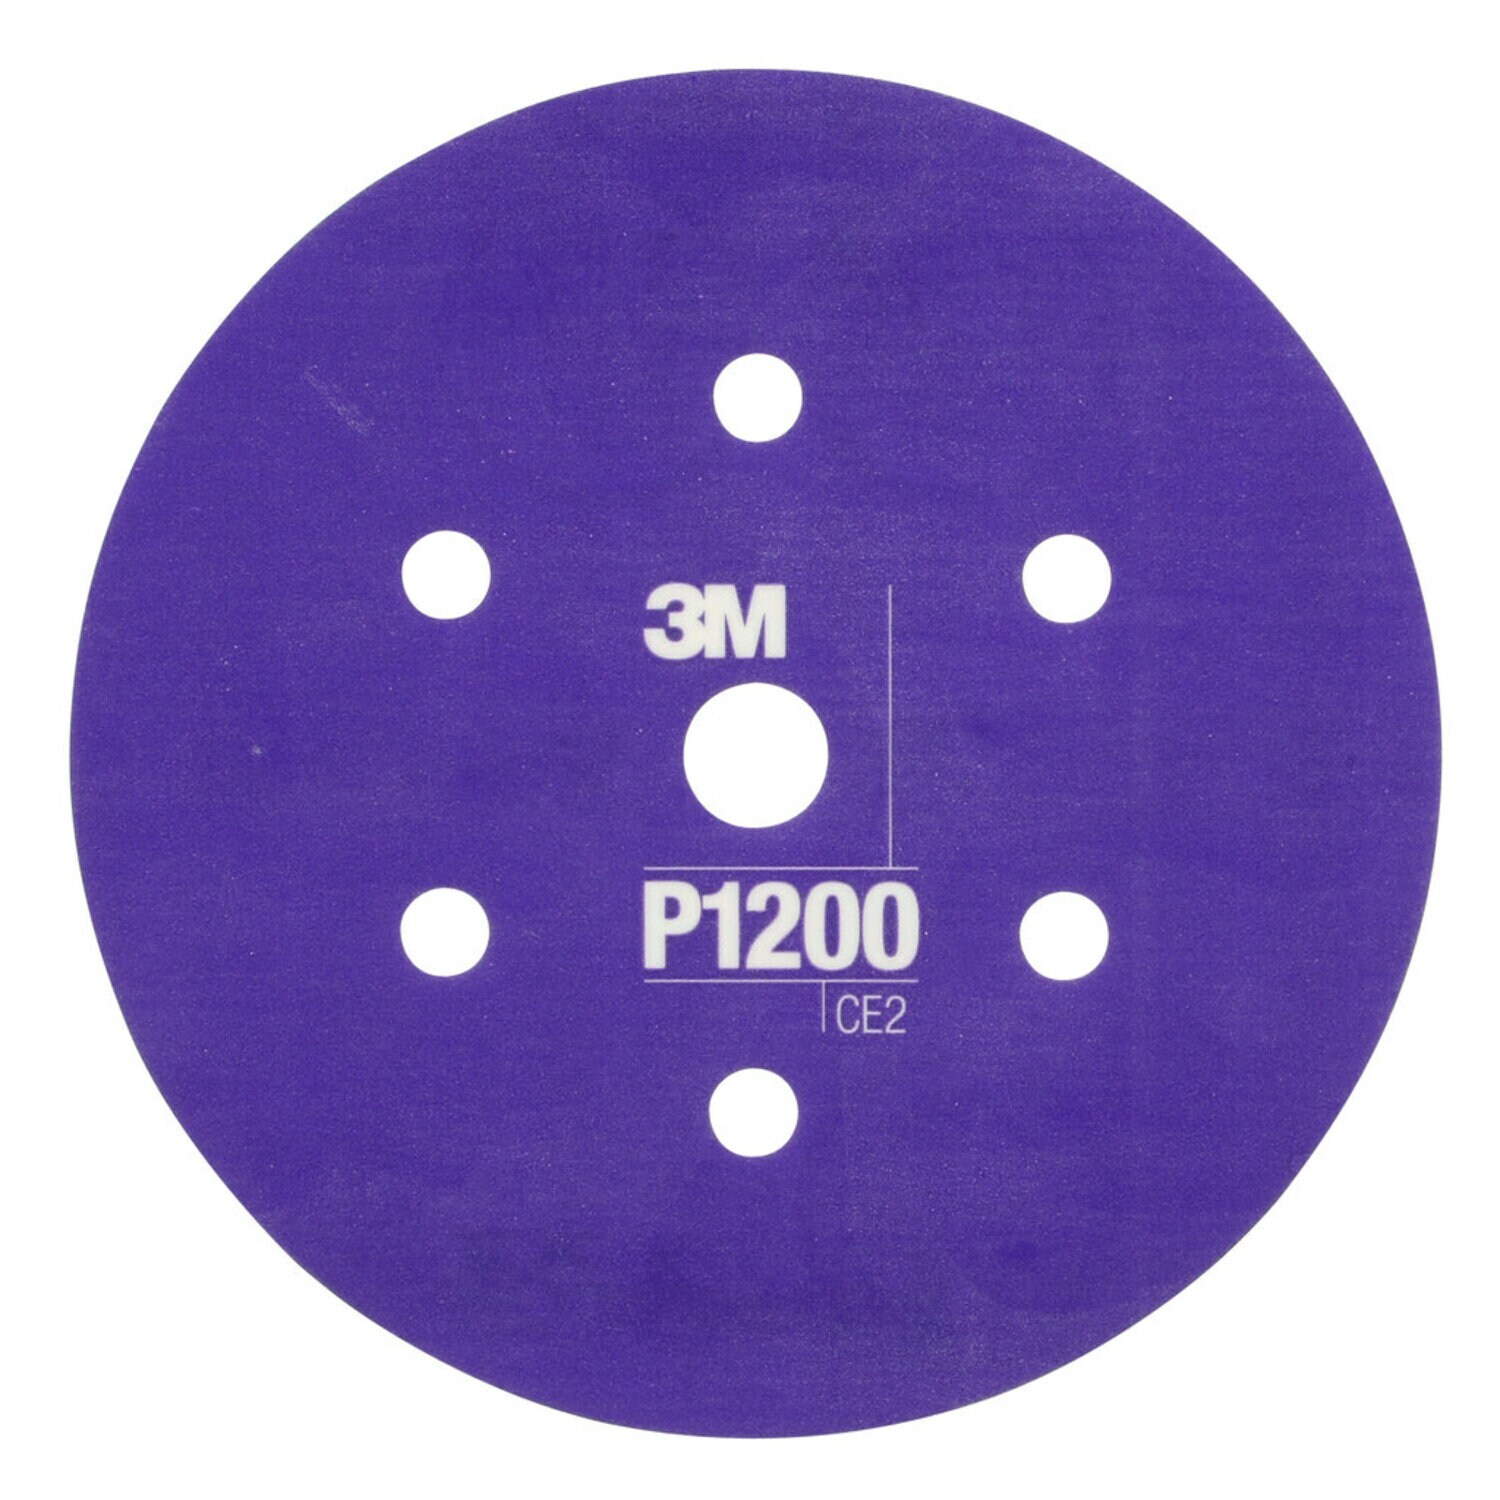 7000120197 - 3M Hookit Flexible Abrasive Disc 270J, 34408, 6 in, Dust Free, P1200,
25 disc per carton, 5 cartons per case